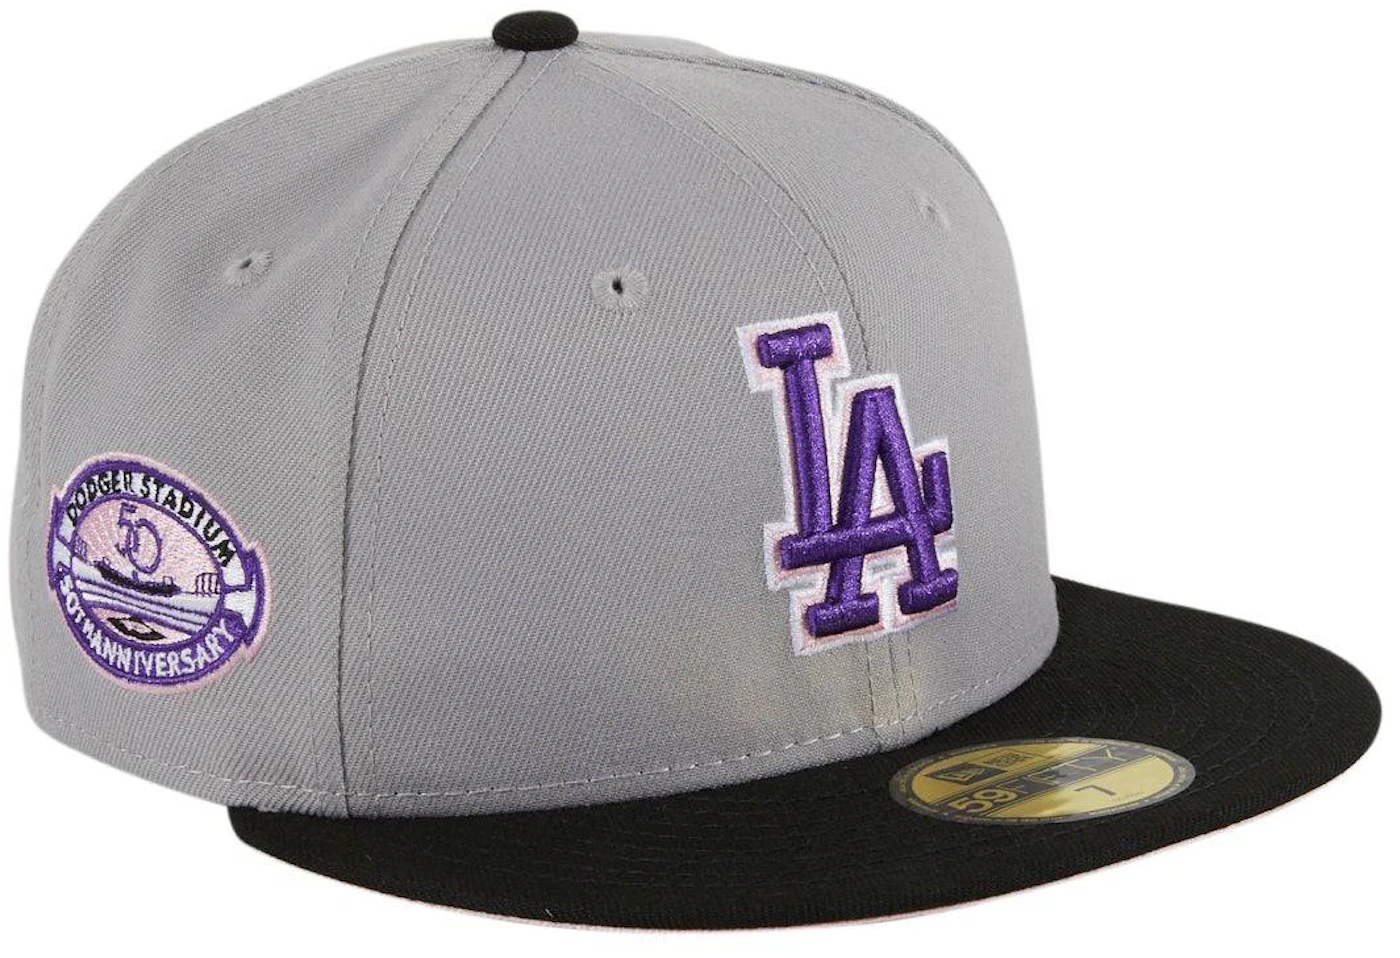 New Era Los Angeles Dodgers Basketball Shorts Purple